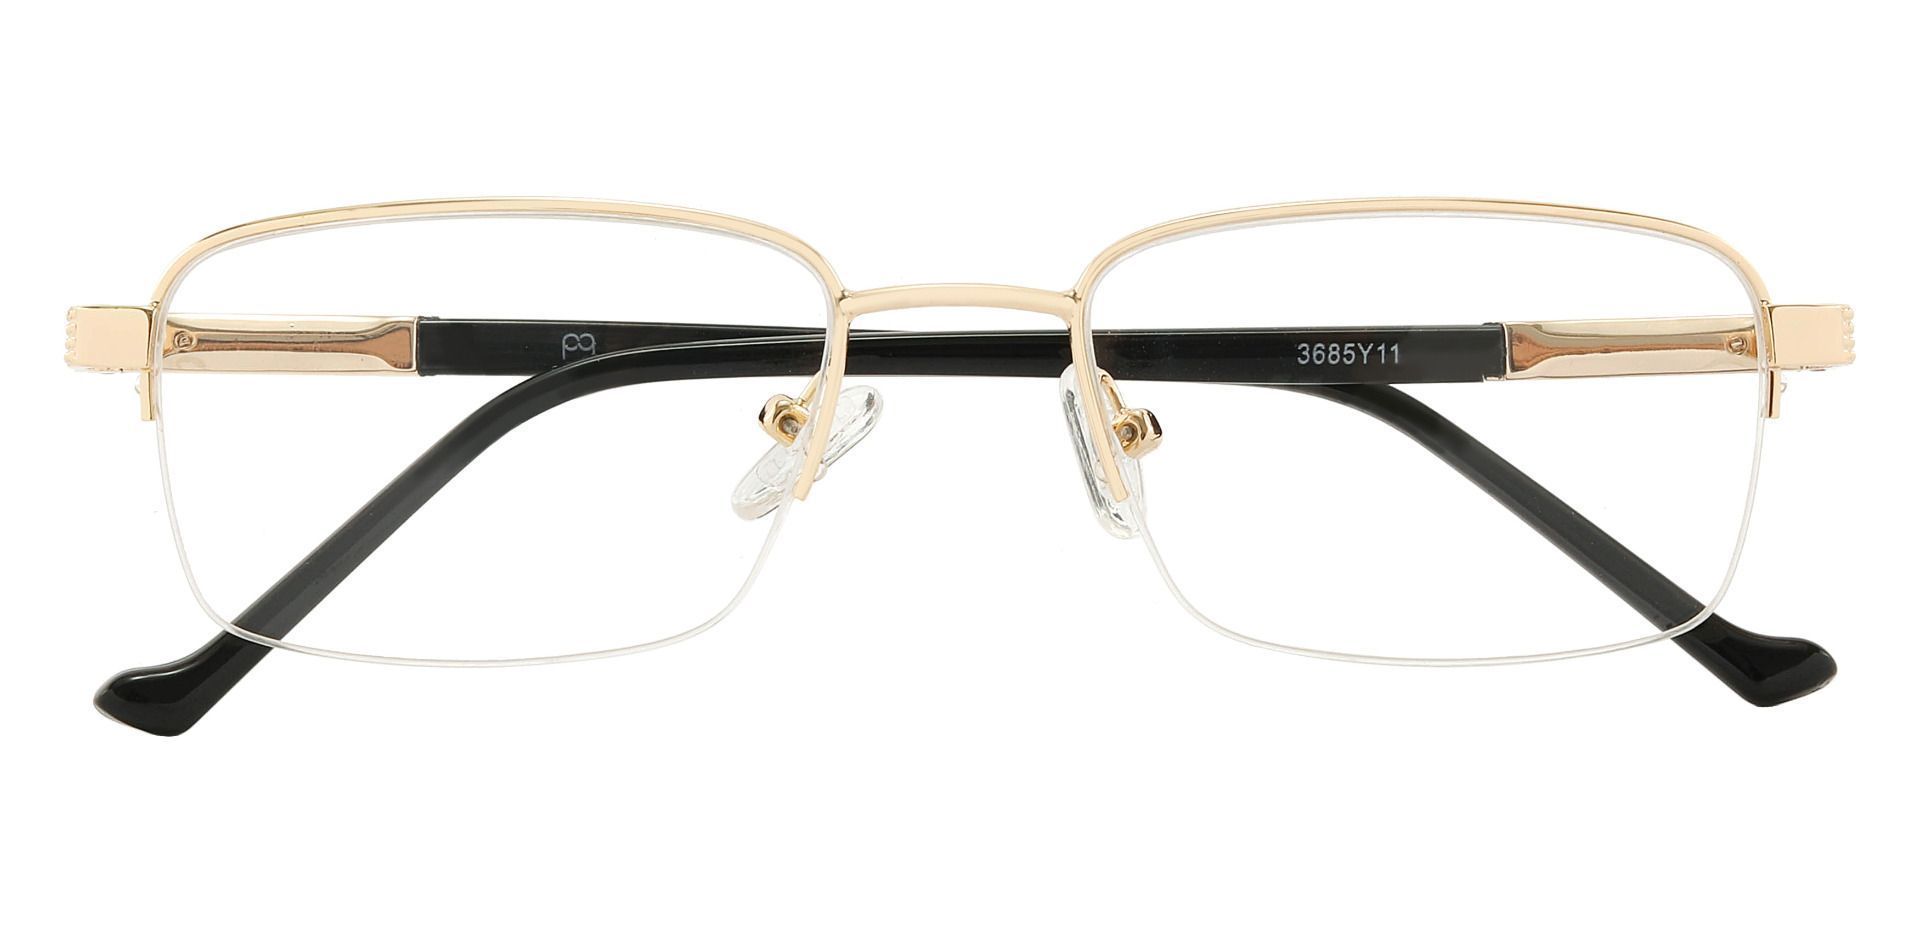 Canton Rectangle Eyeglasses Frame - Gold